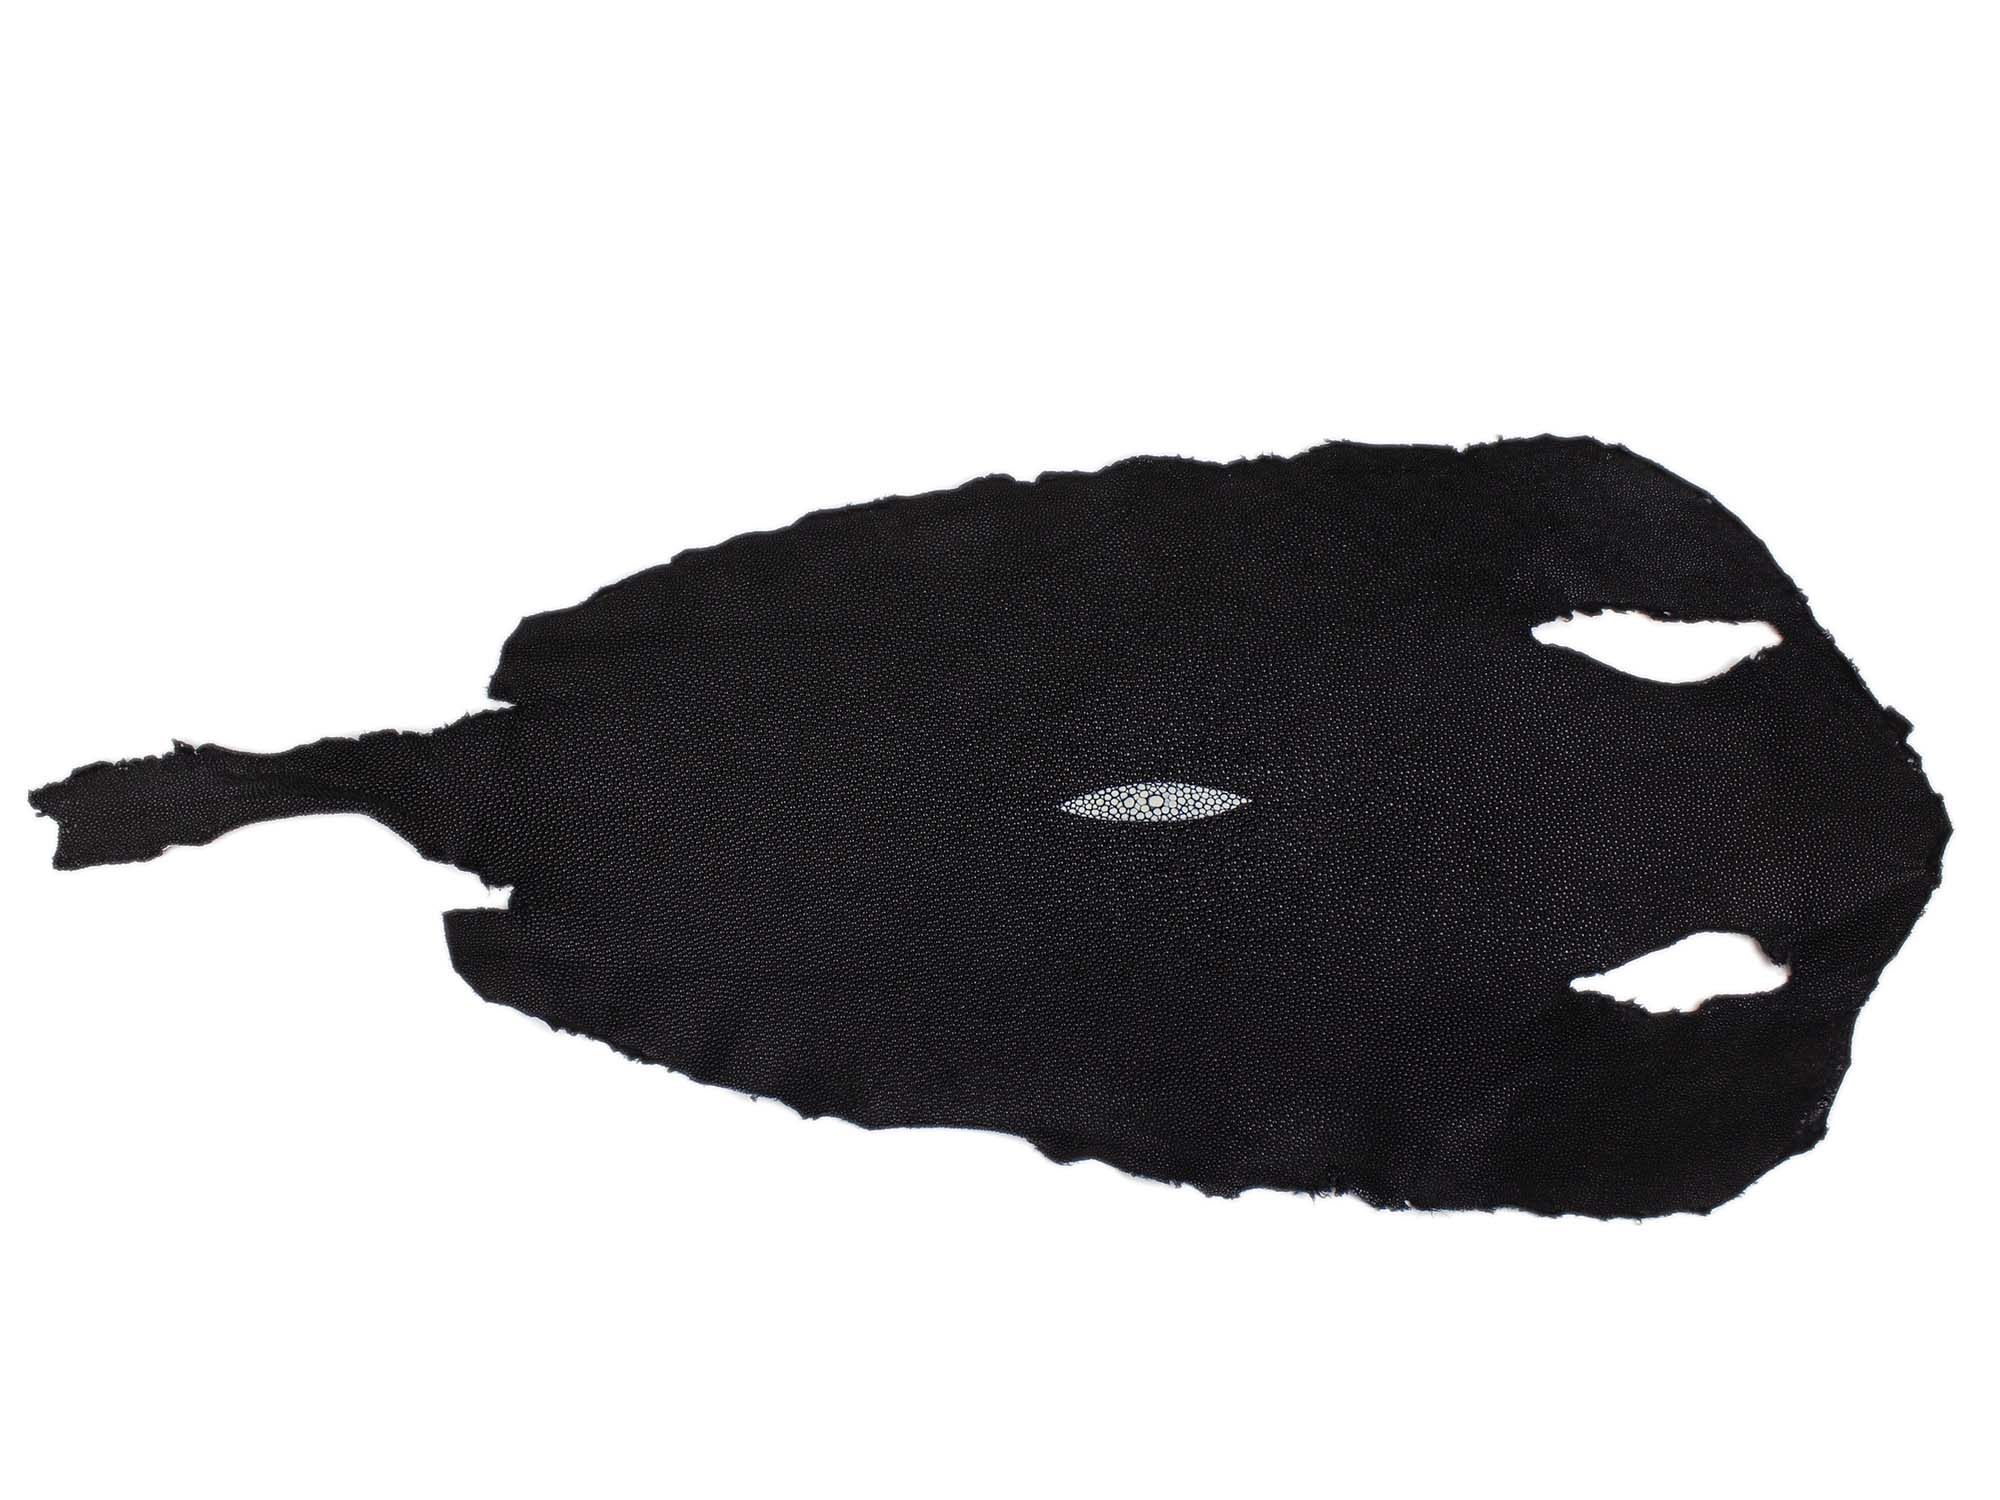 Stingray Leather: Large: Natural Black: Gallery Item 